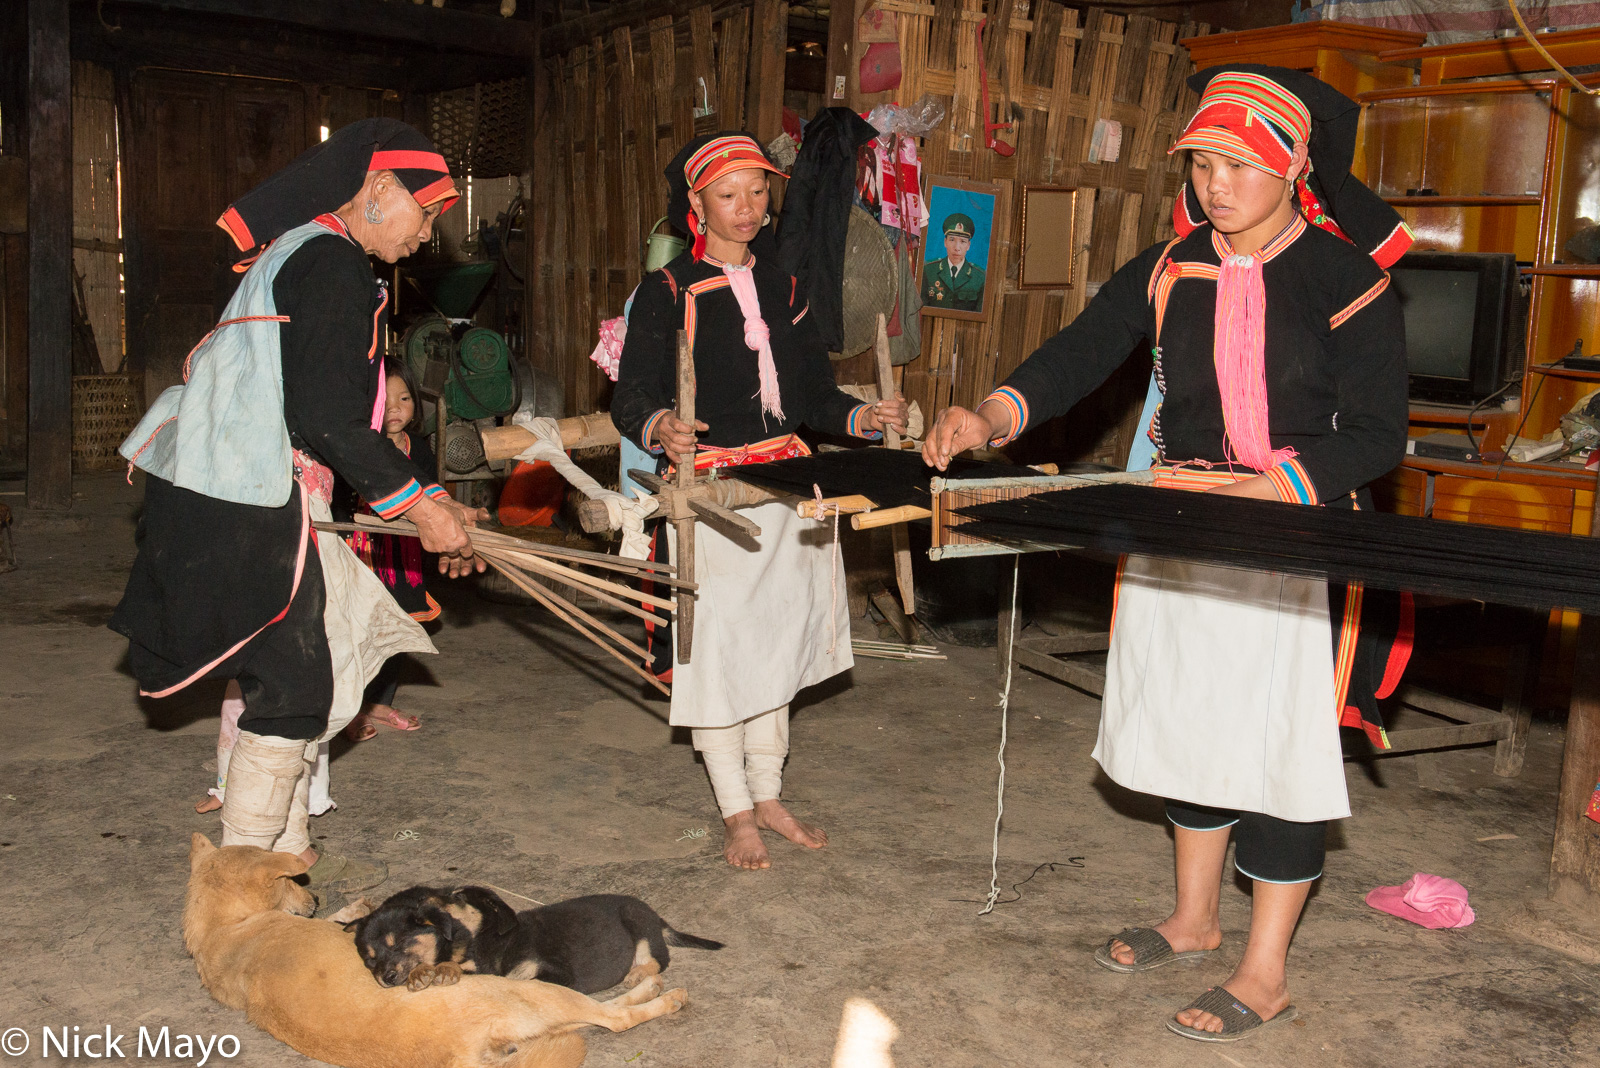 Black Dao (Yao) women from Pocha village preparing warp thread while the household dogs sleep.